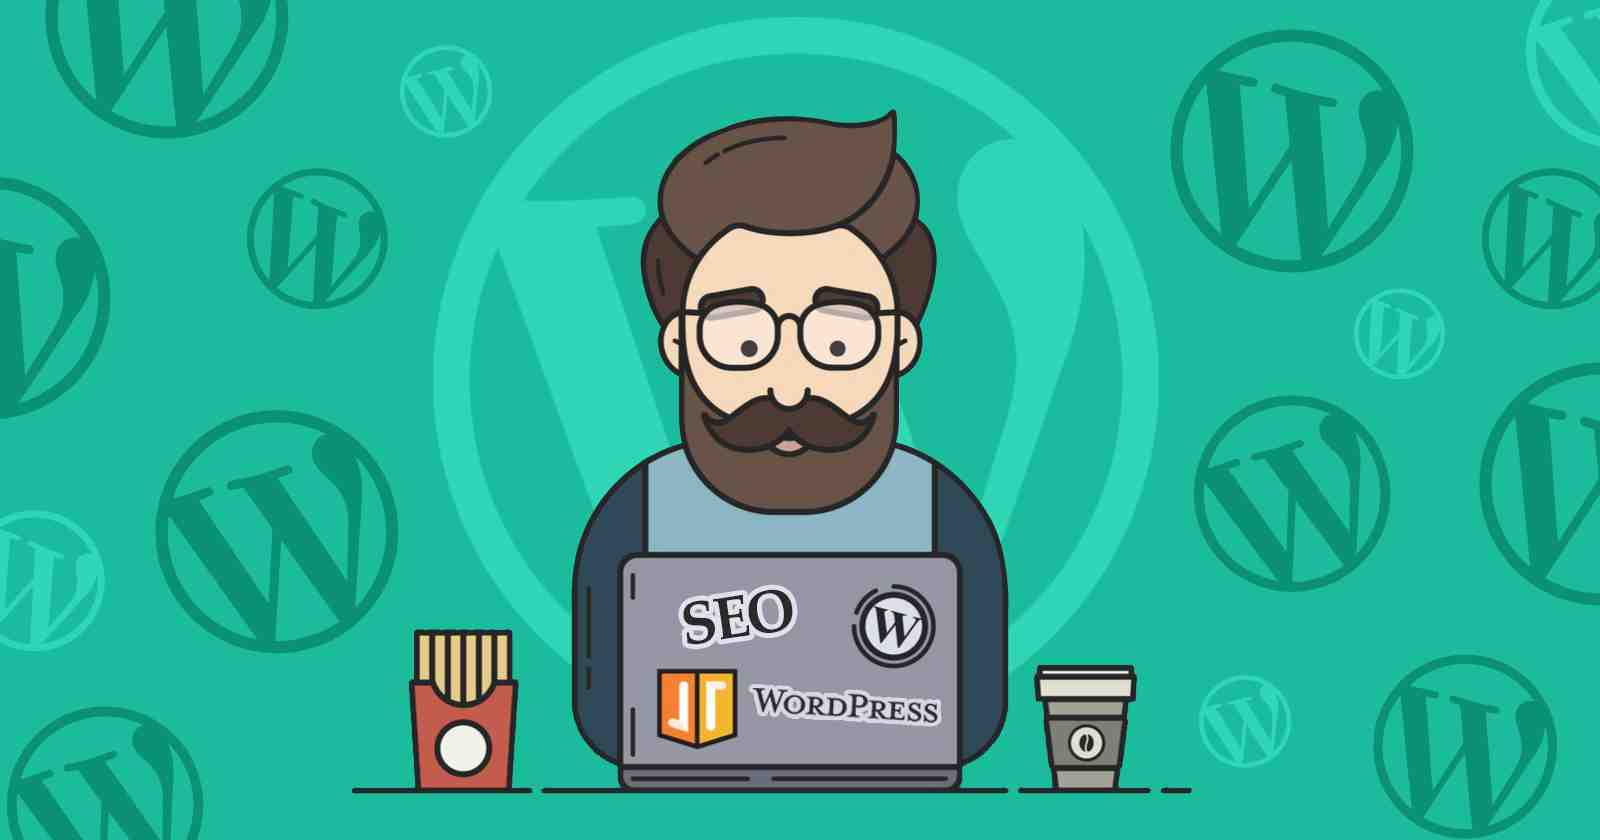 What is SEO in WordPress?